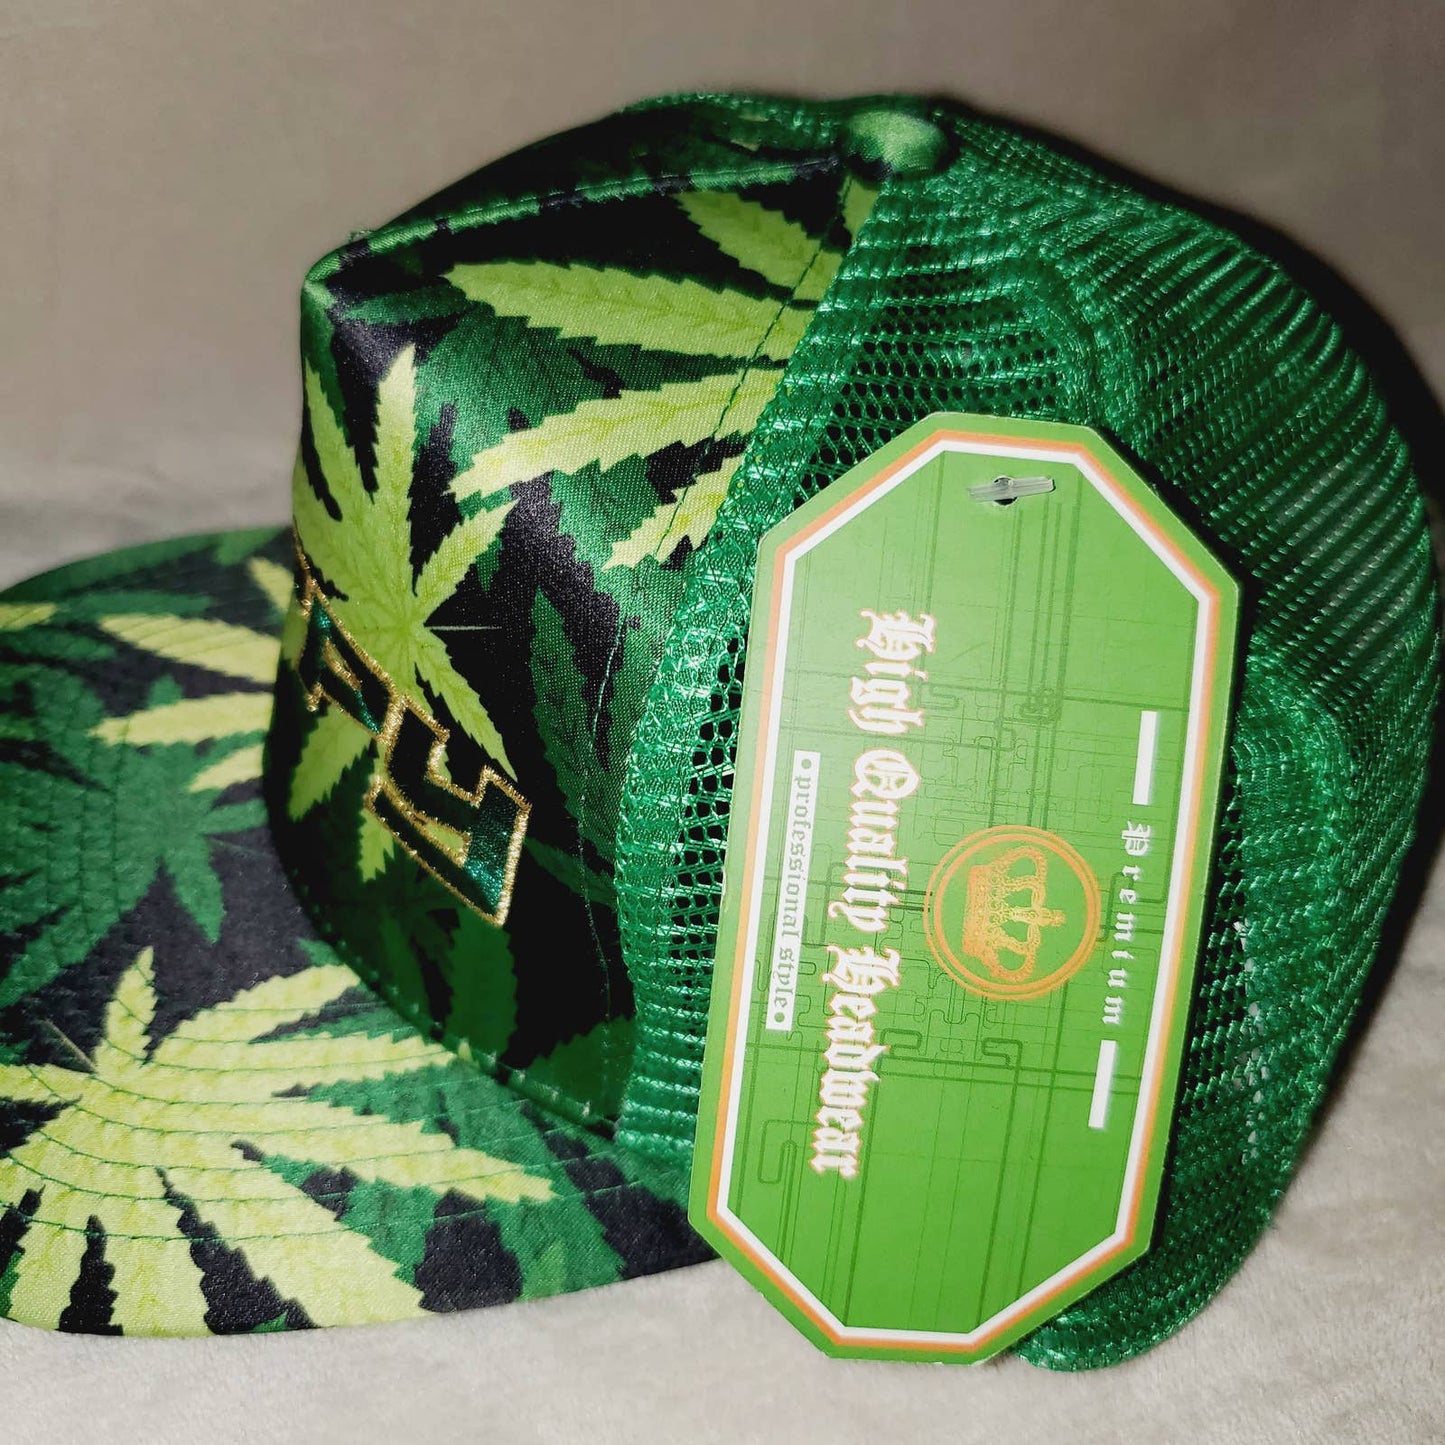 Crippy Embroidered Headwear Cannabis Marijuana 420 Adjustable Trucker Hats - NWT